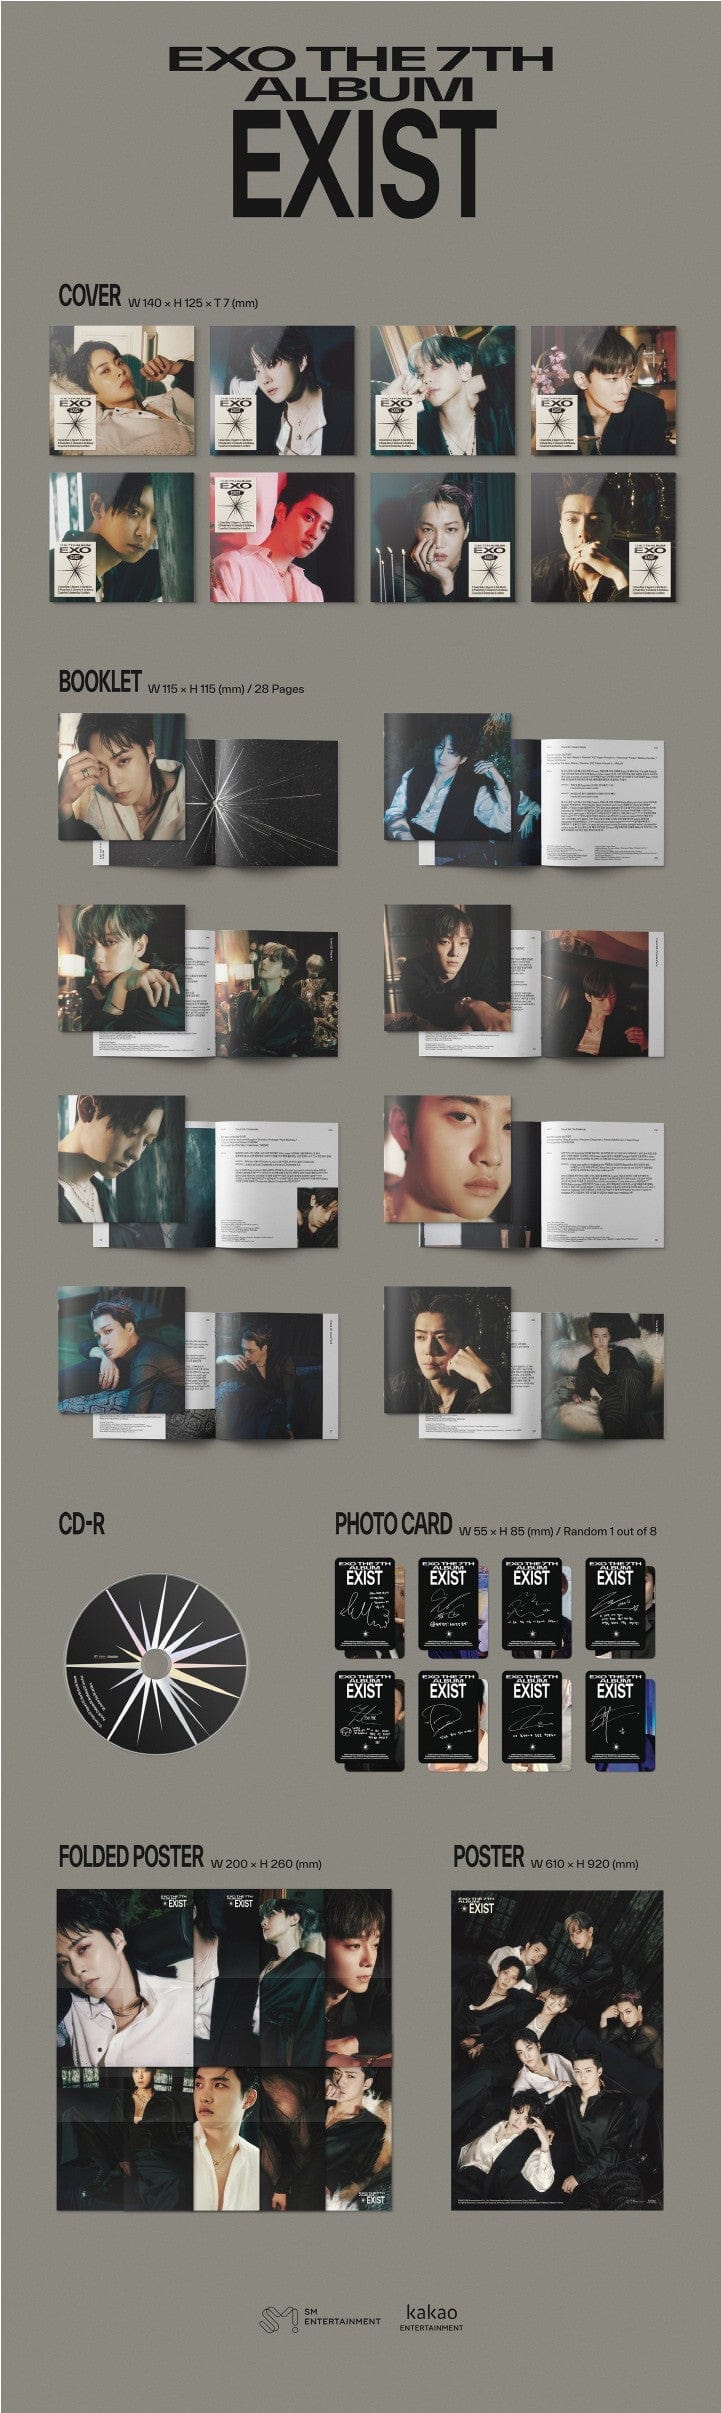 Korea Pop Store EXO - Vol. 7 [Exist] Digipack Ver. Kawaii Gifts